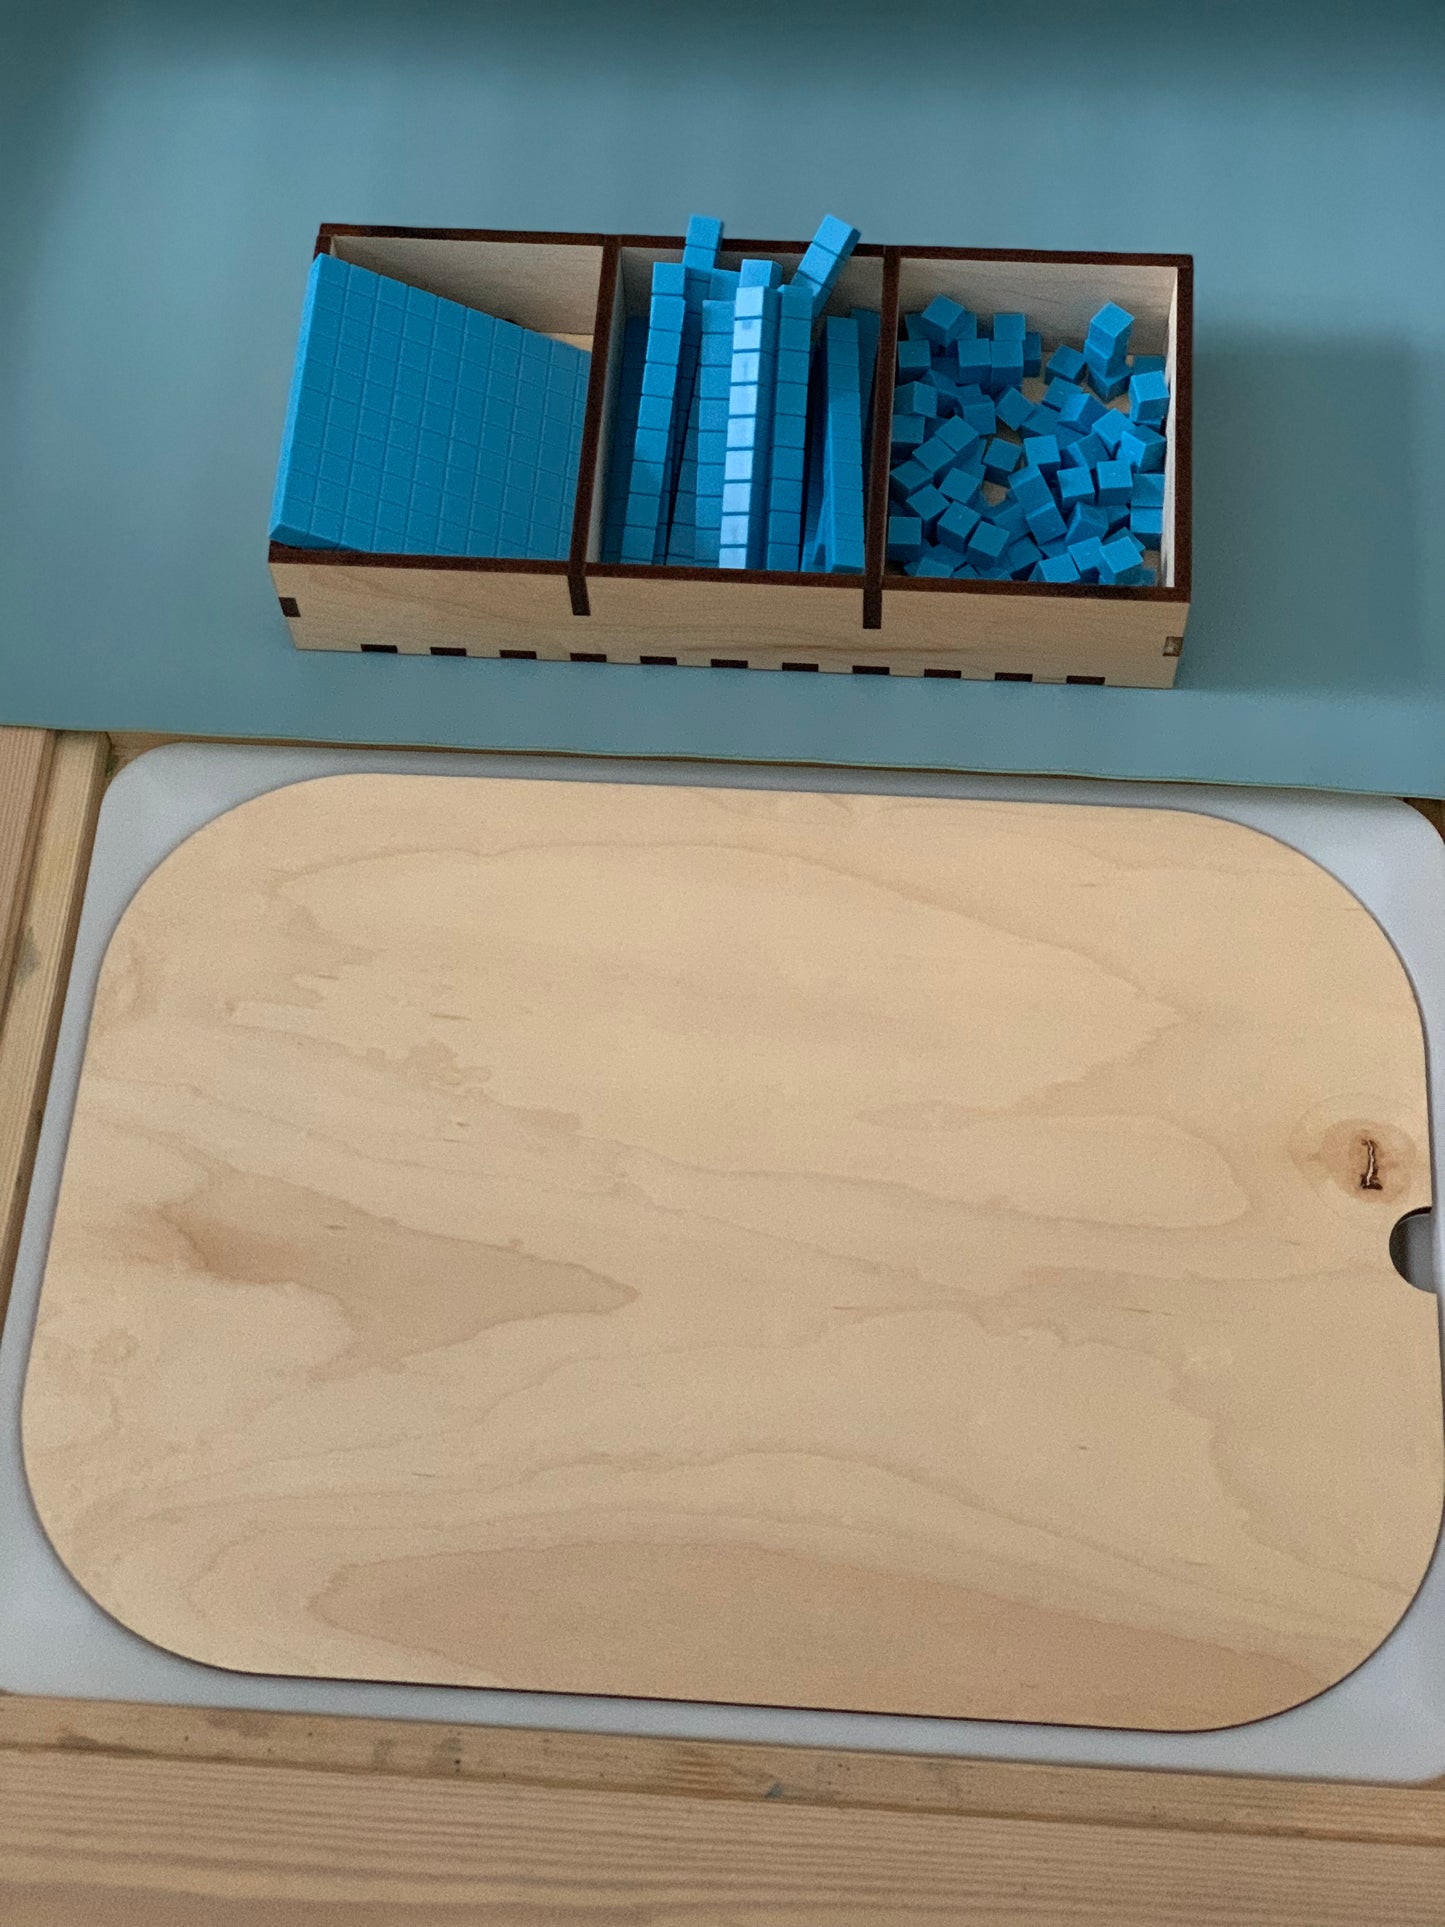 Flisat Table Top Insert for Base 10 Blocks, White Acrylic is Dry Erasable, Double Sided - Plain Wood on Opposite Side